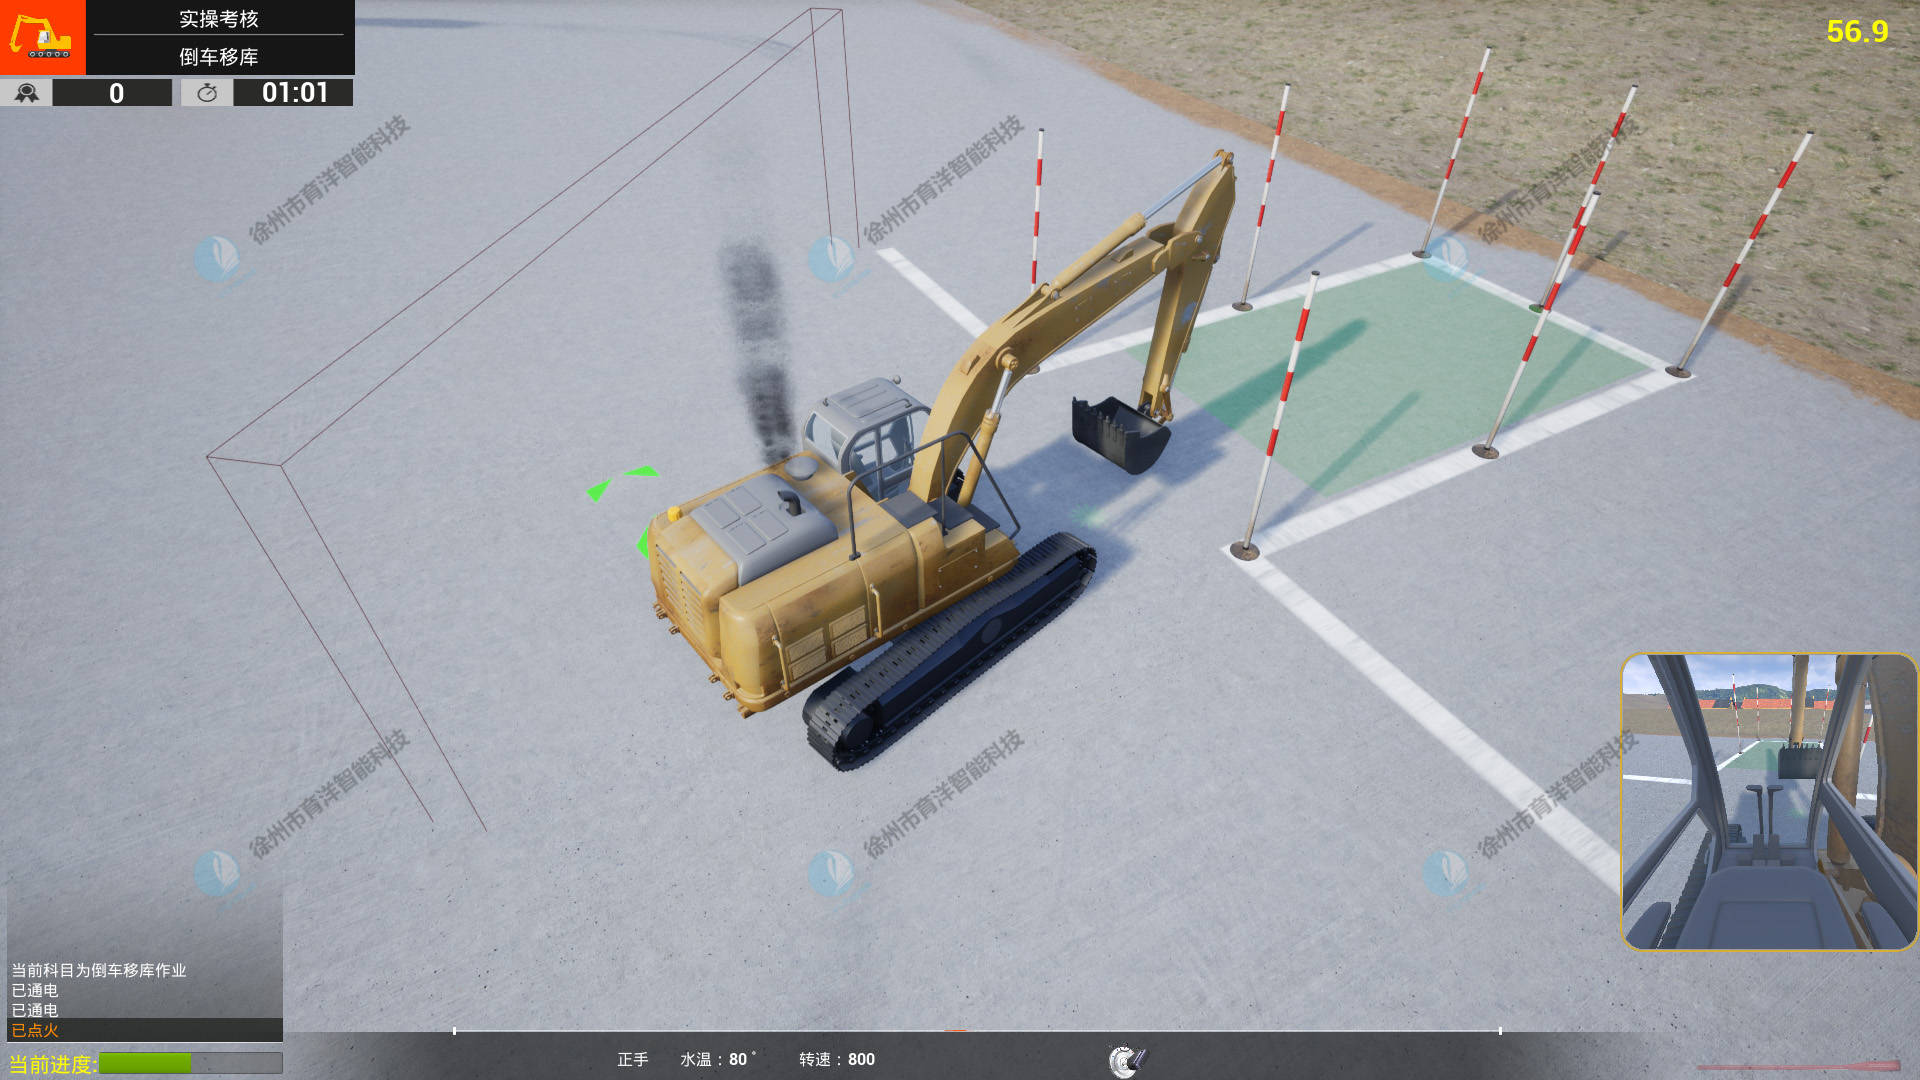 Operation lever excavation simulator game video_Excavator simulation real joystick excavation_Excavator game simulation operation lever